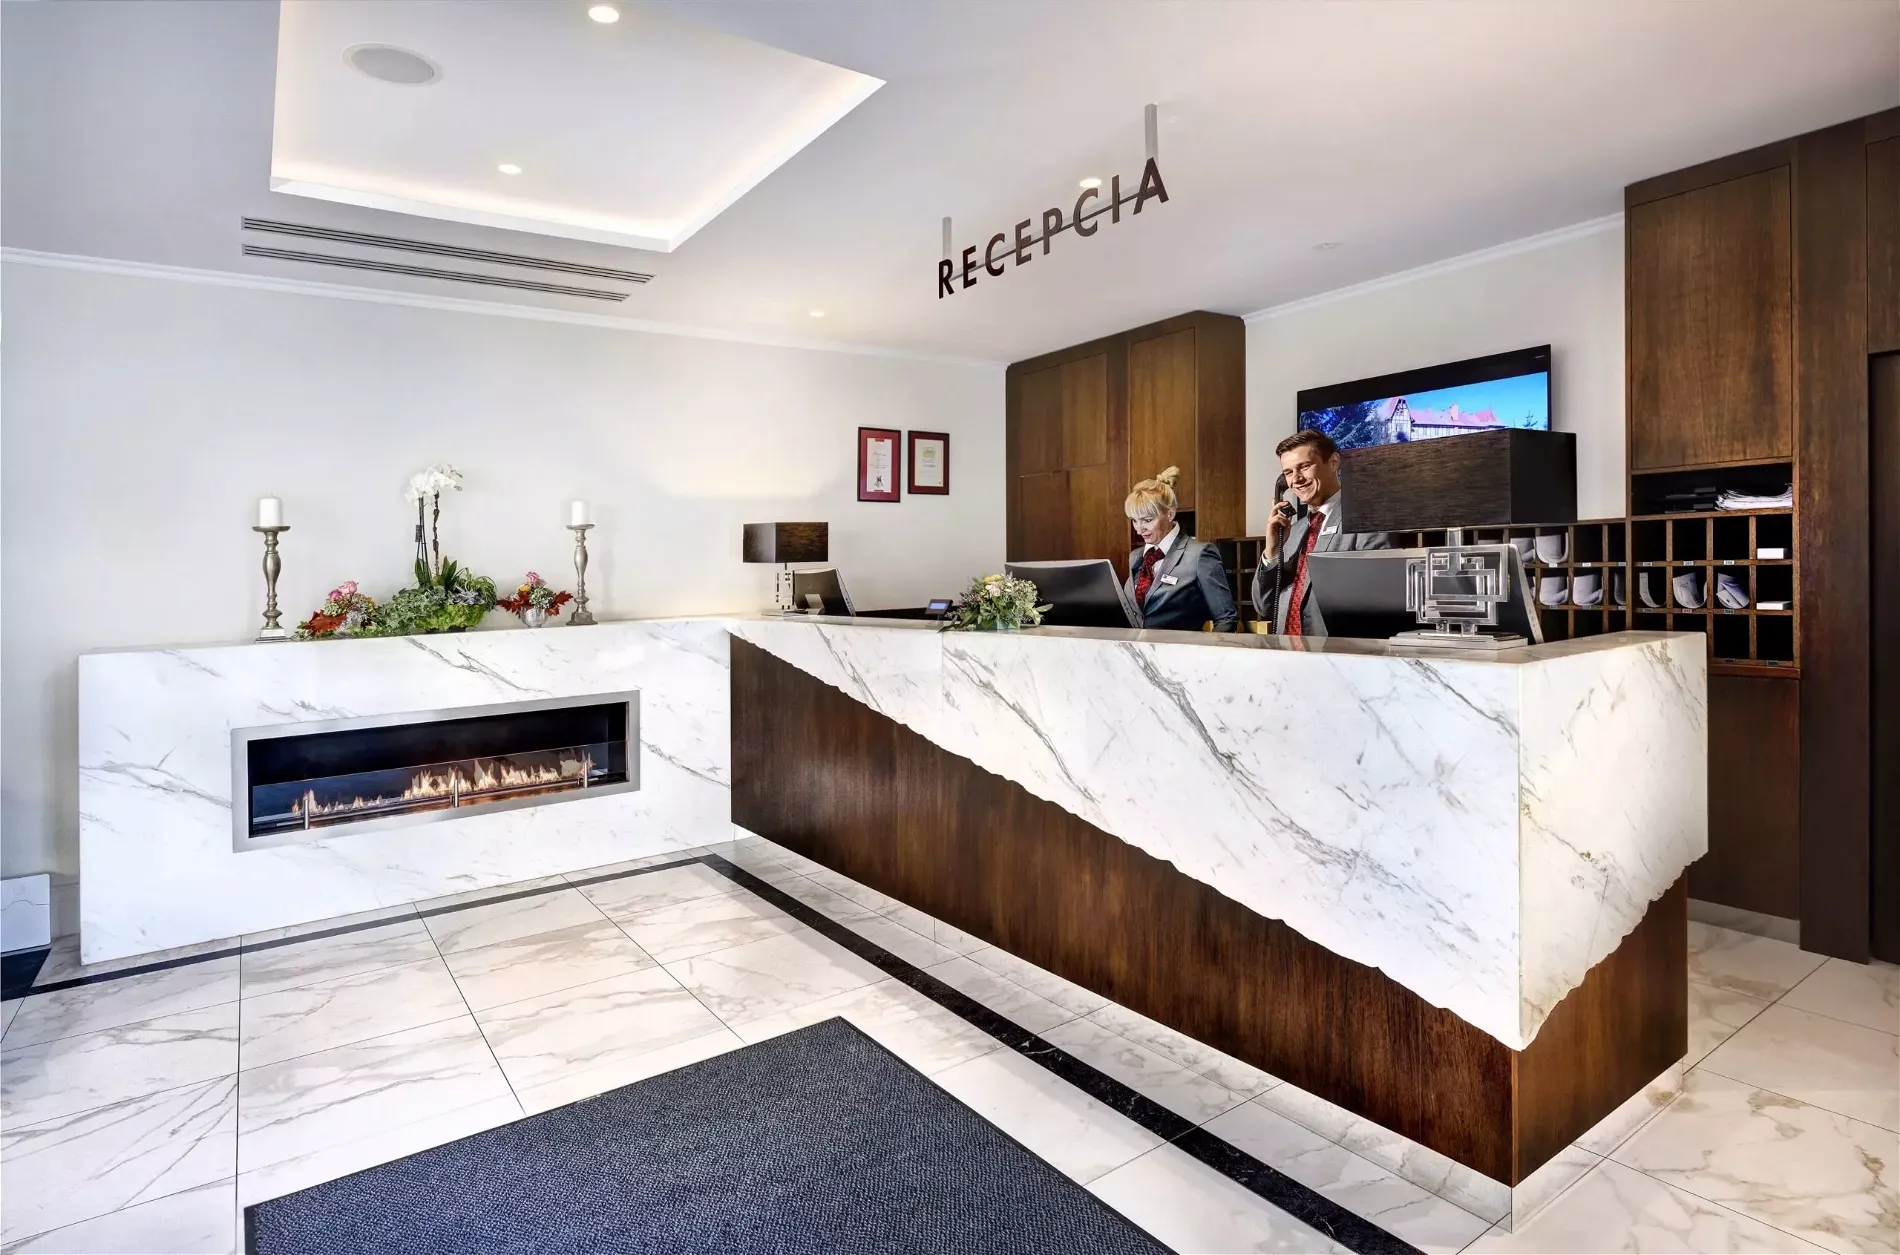 c Marek Hajkovsky foto Hotel Lomnica Recepcia a Beauty salon 2018 12 scaled